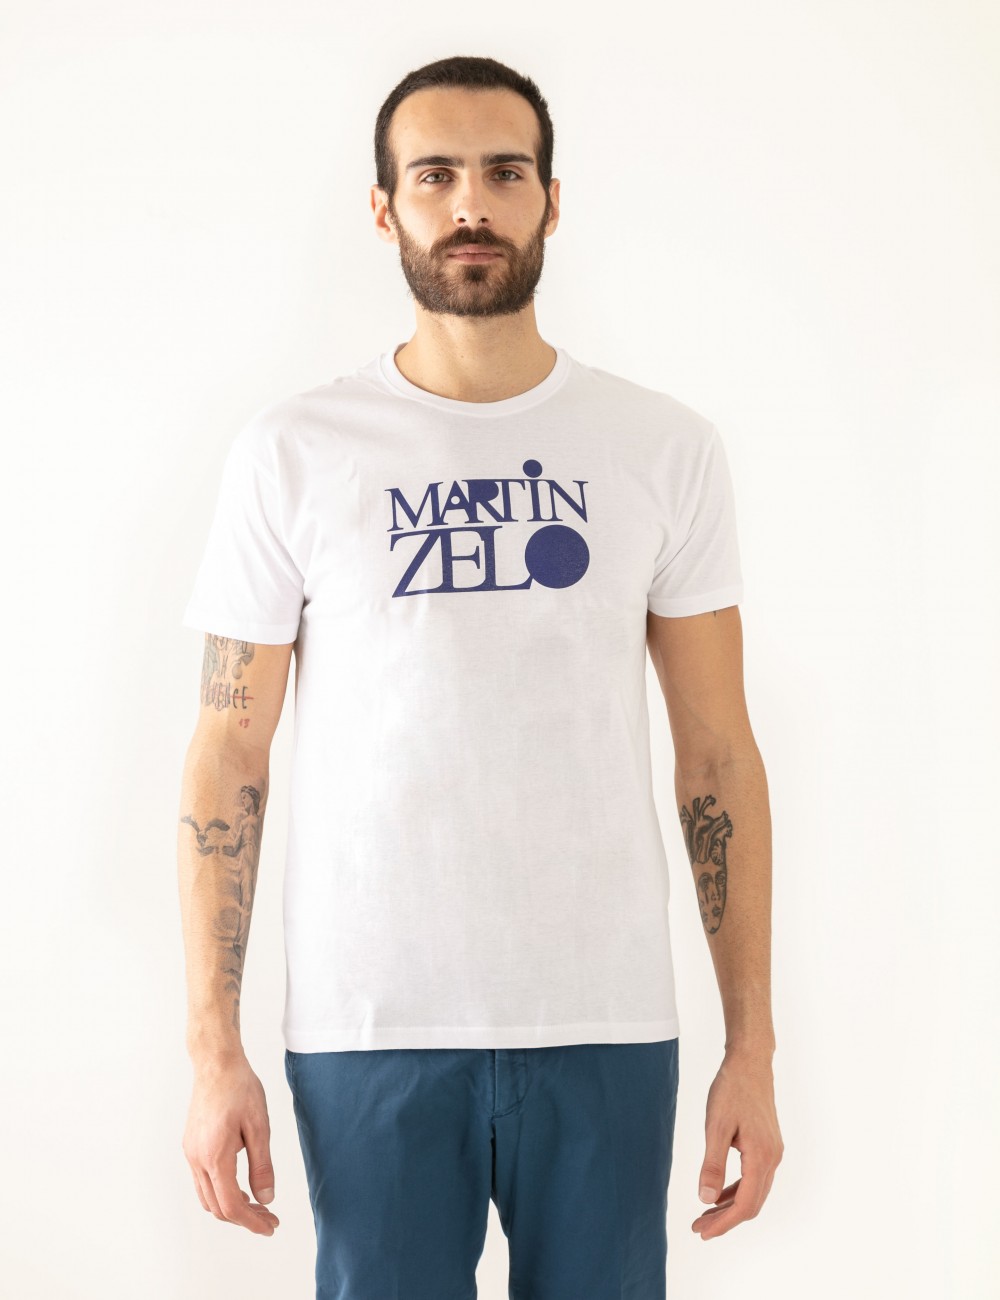 T-shirt "Zelo" stampa Martin Zelo in cotone indossata dettaglio frontale